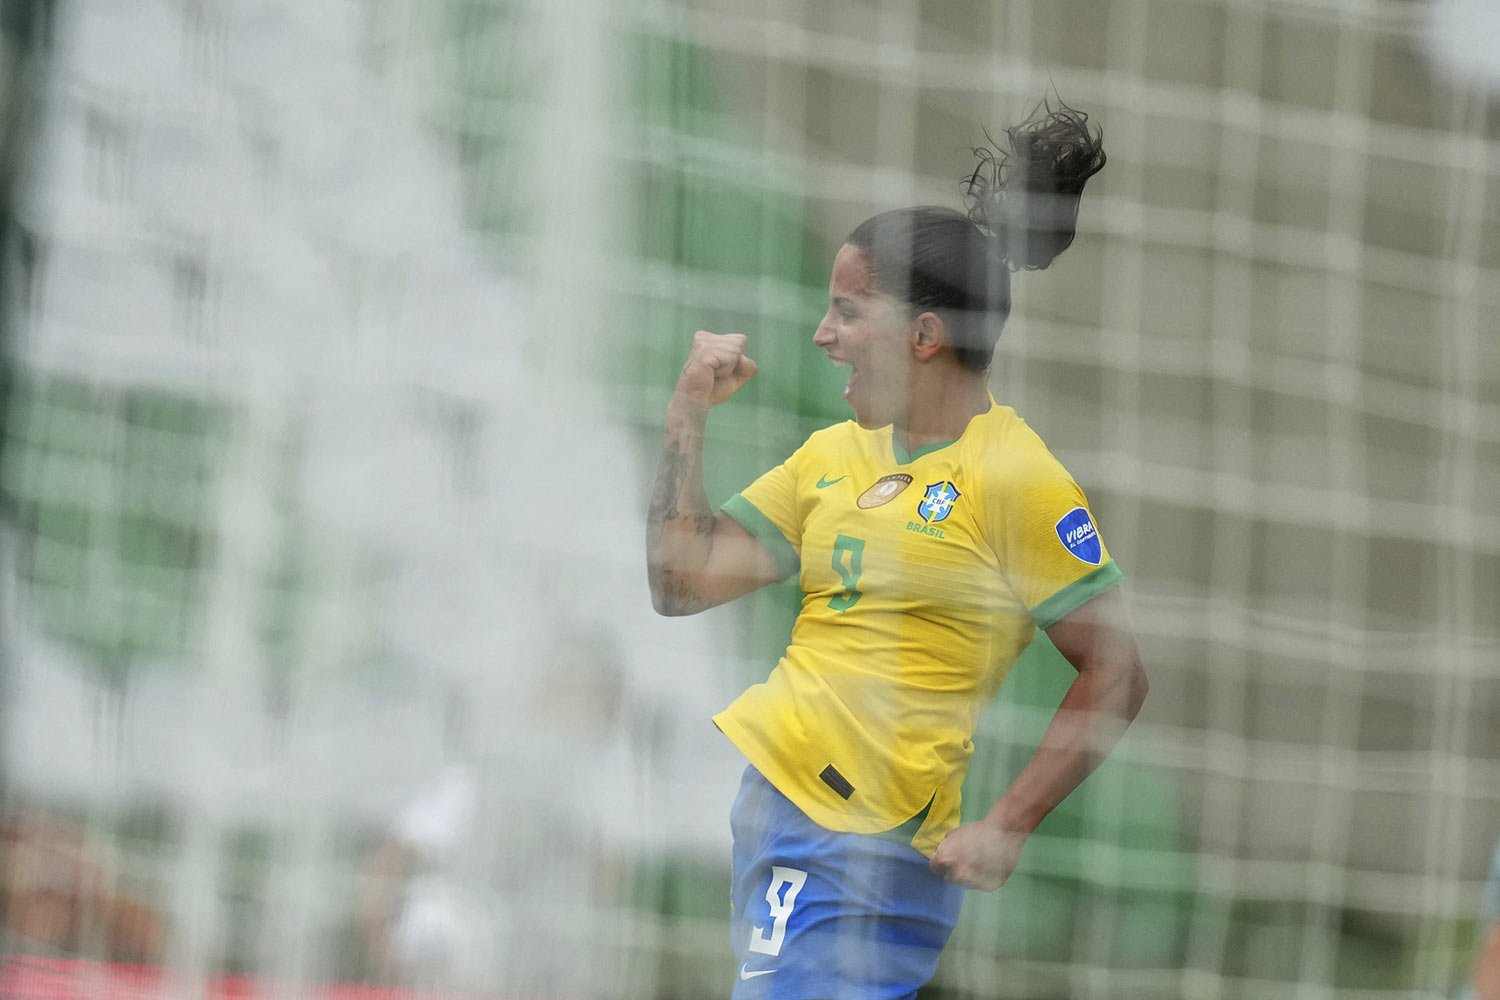  Brazil's Debinha celebrates after scoring against Venezuela during a Women's Copa America soccer match in Armenia, Colombia, Monday, July 18, 2022. (AP Photo/Dolores Ochoa) 